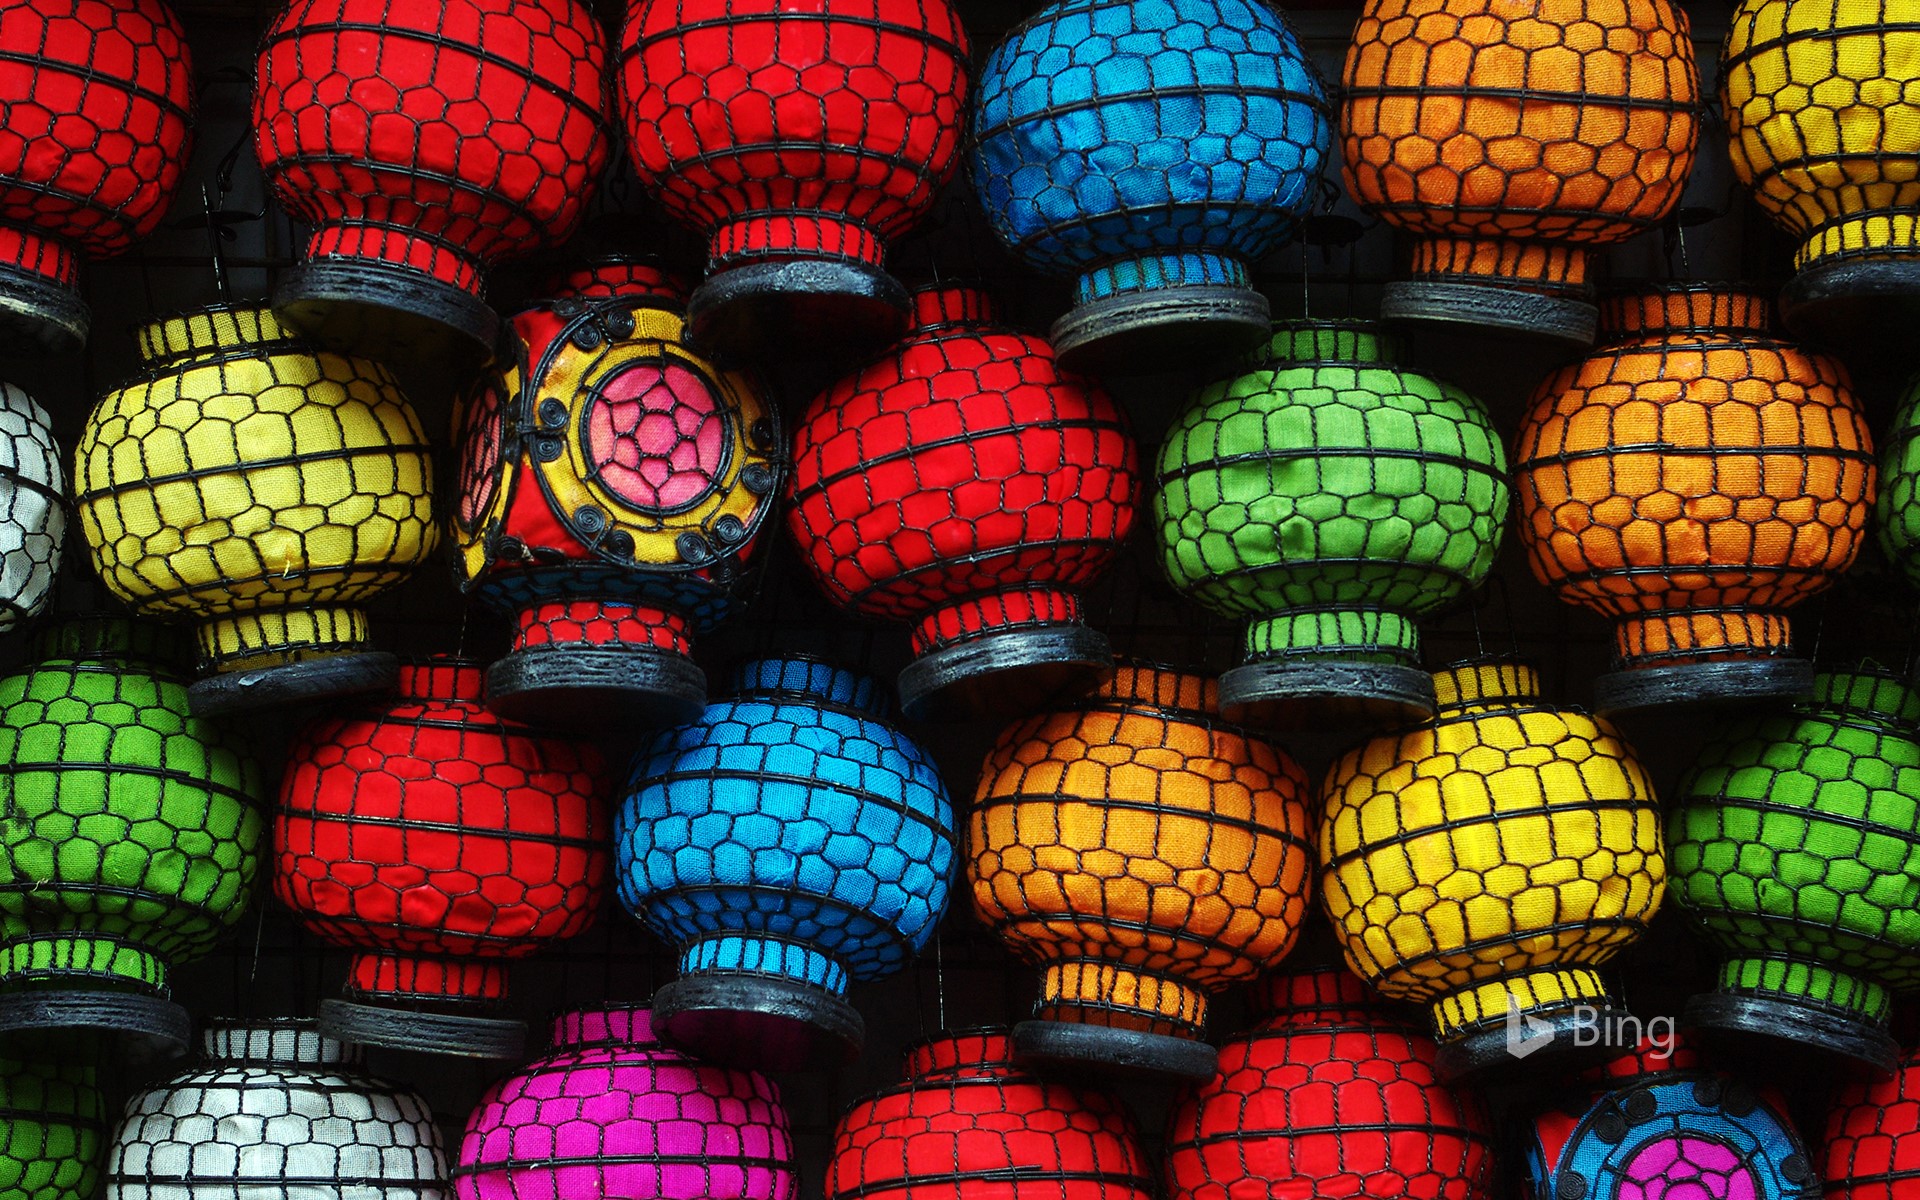 Lanterns on sale at Beijing's Panjiayuan market, China